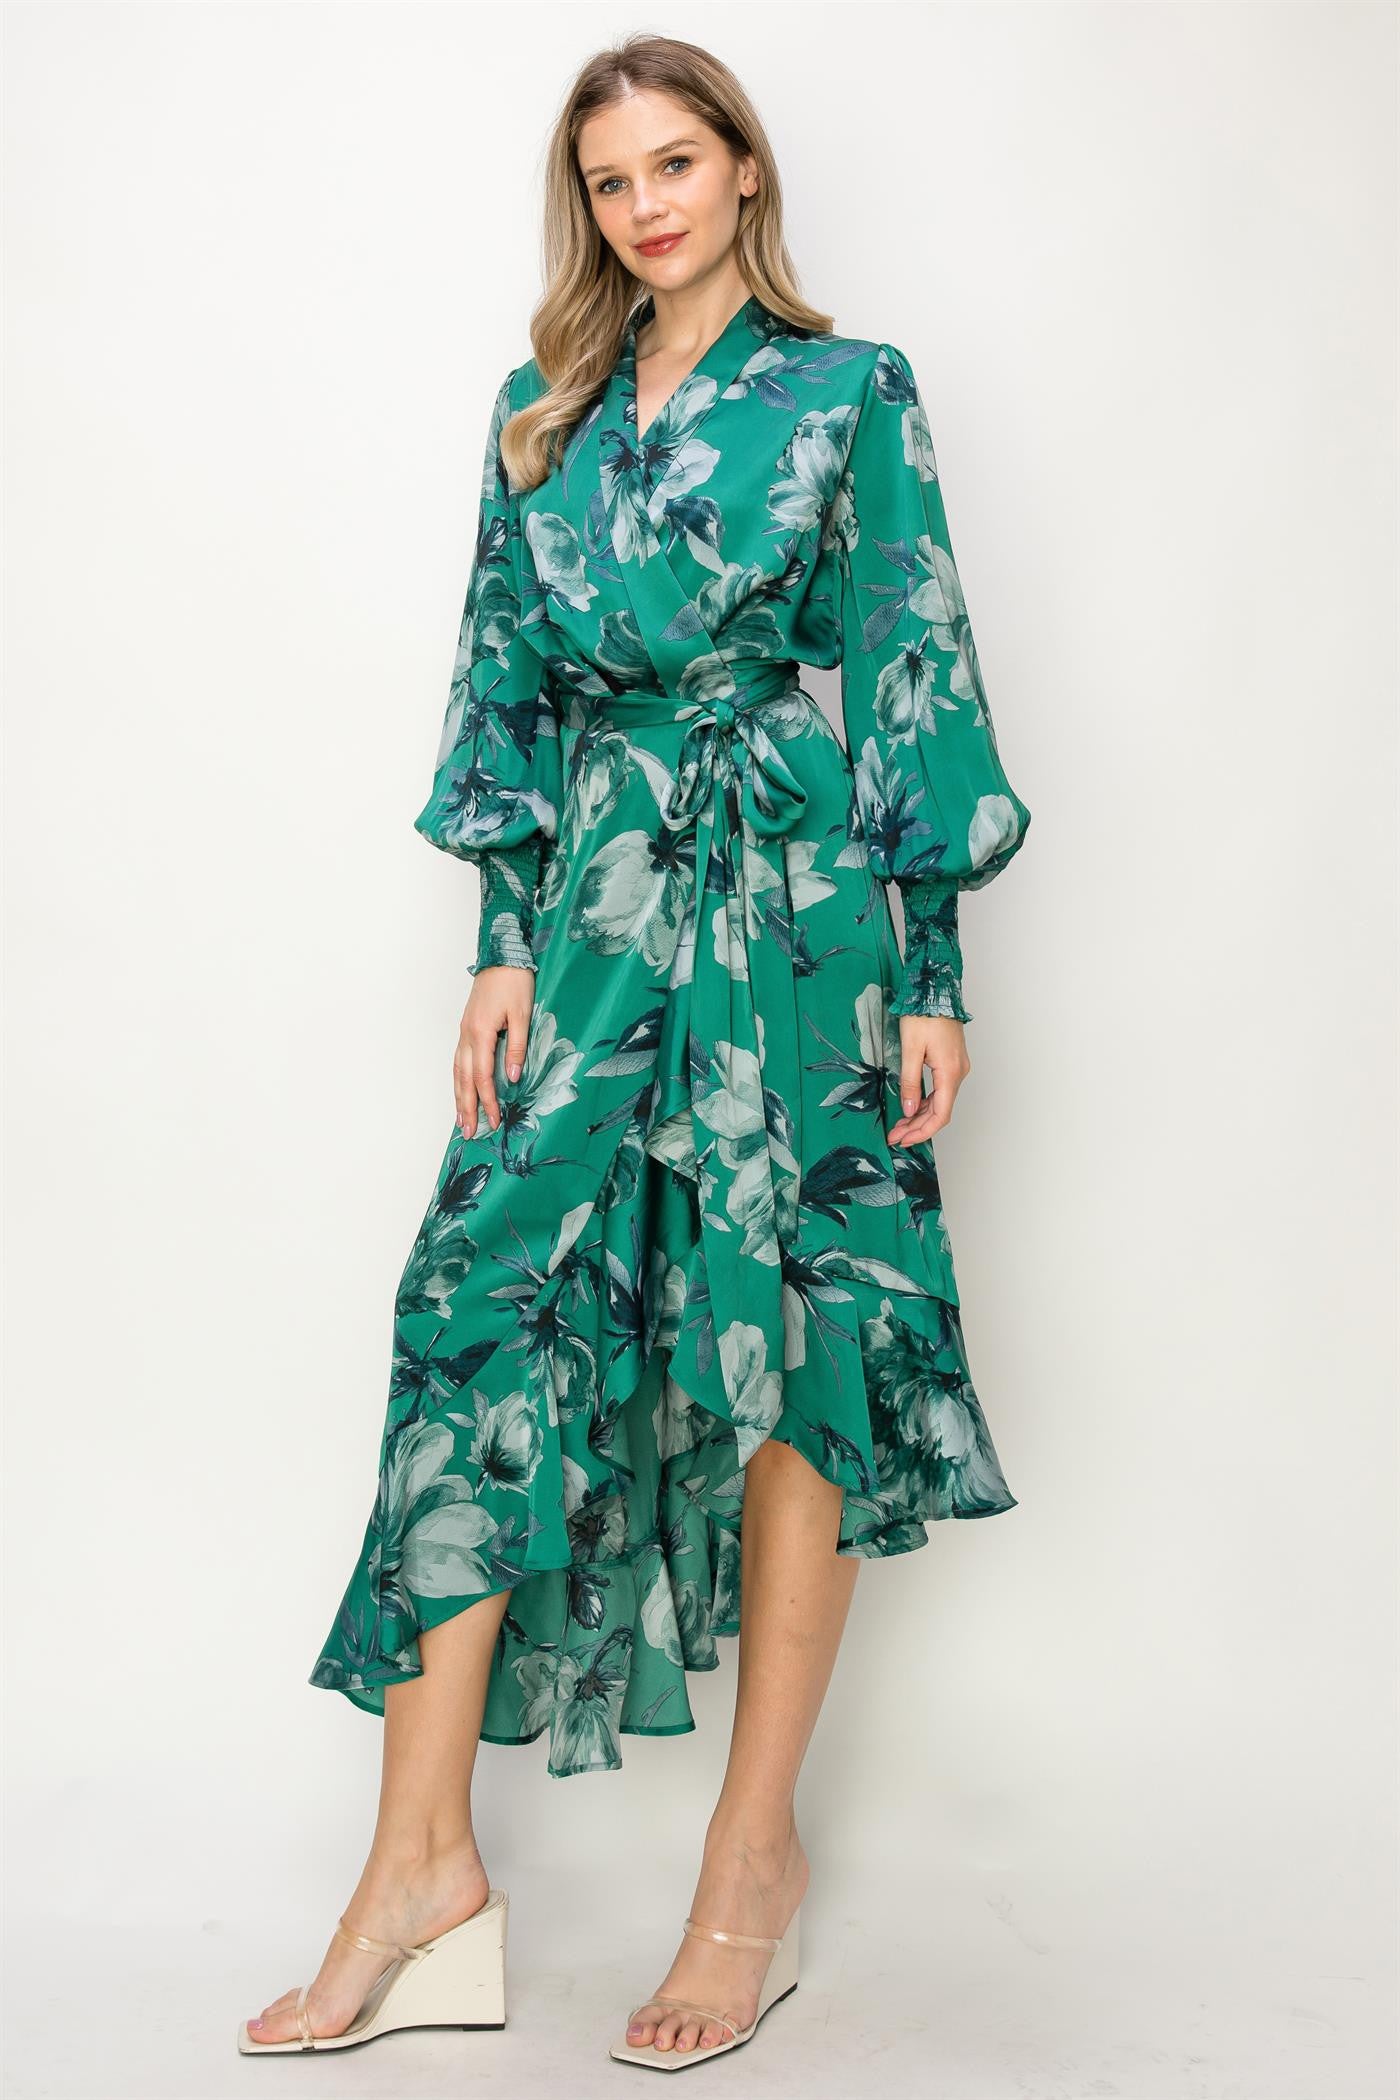 The Verde Floral Maxi Dress